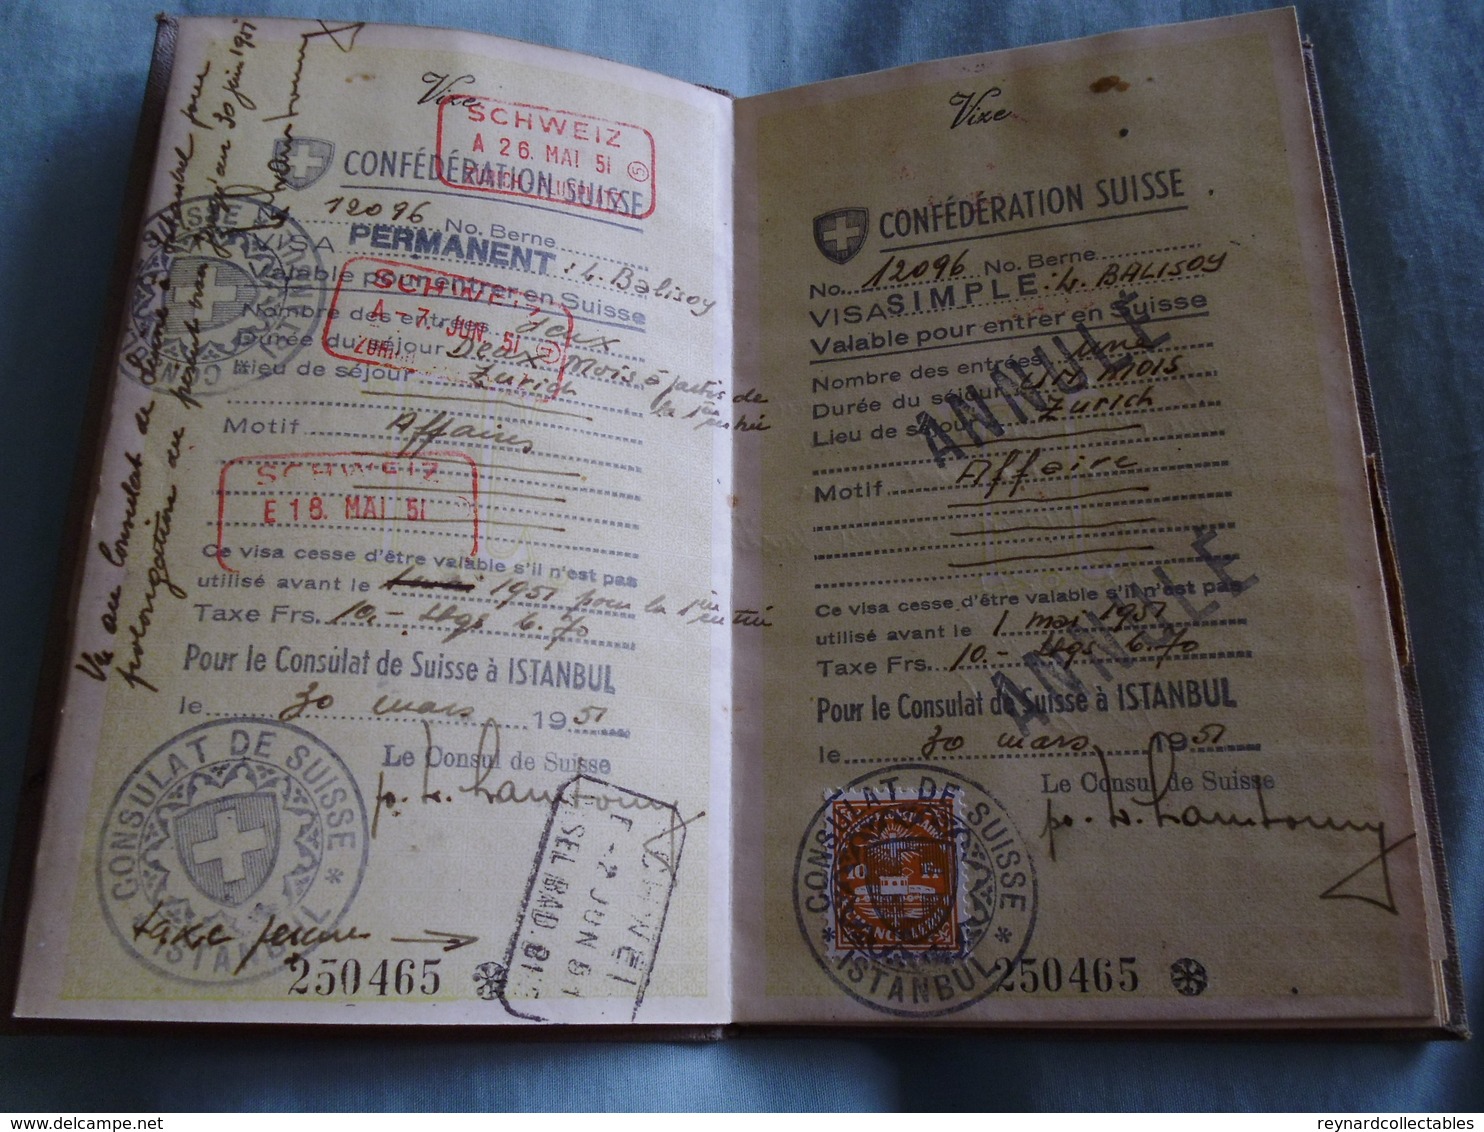 1951 Turkey Reisepass Passport Istanbul. Swiss, German, Greek(!) handstamps. Fiscals.